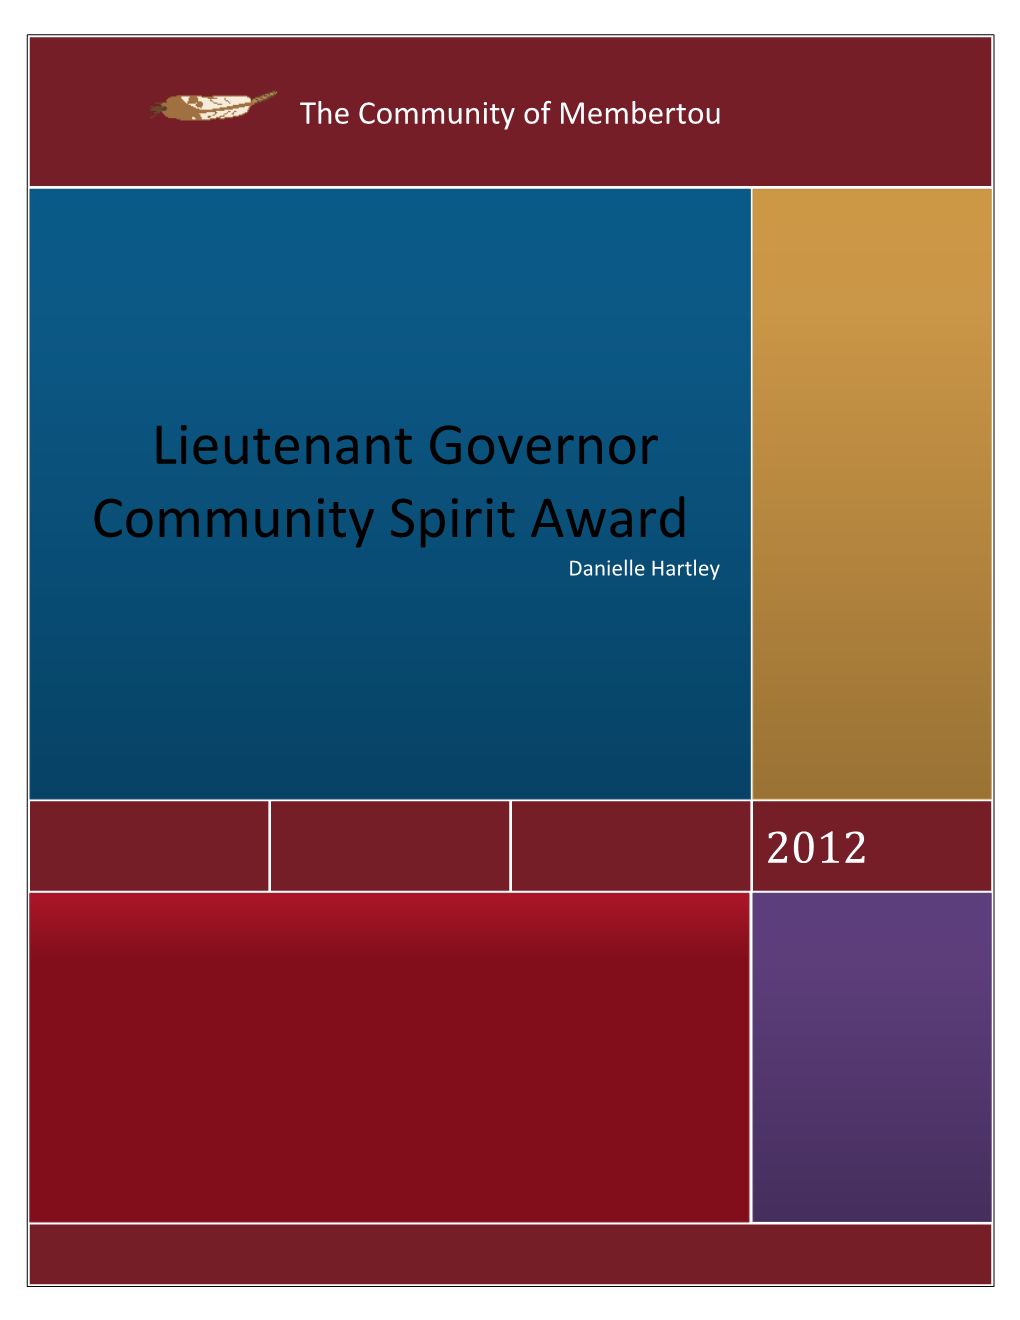 Lieutenant Governor Community Spirit Award Nomination